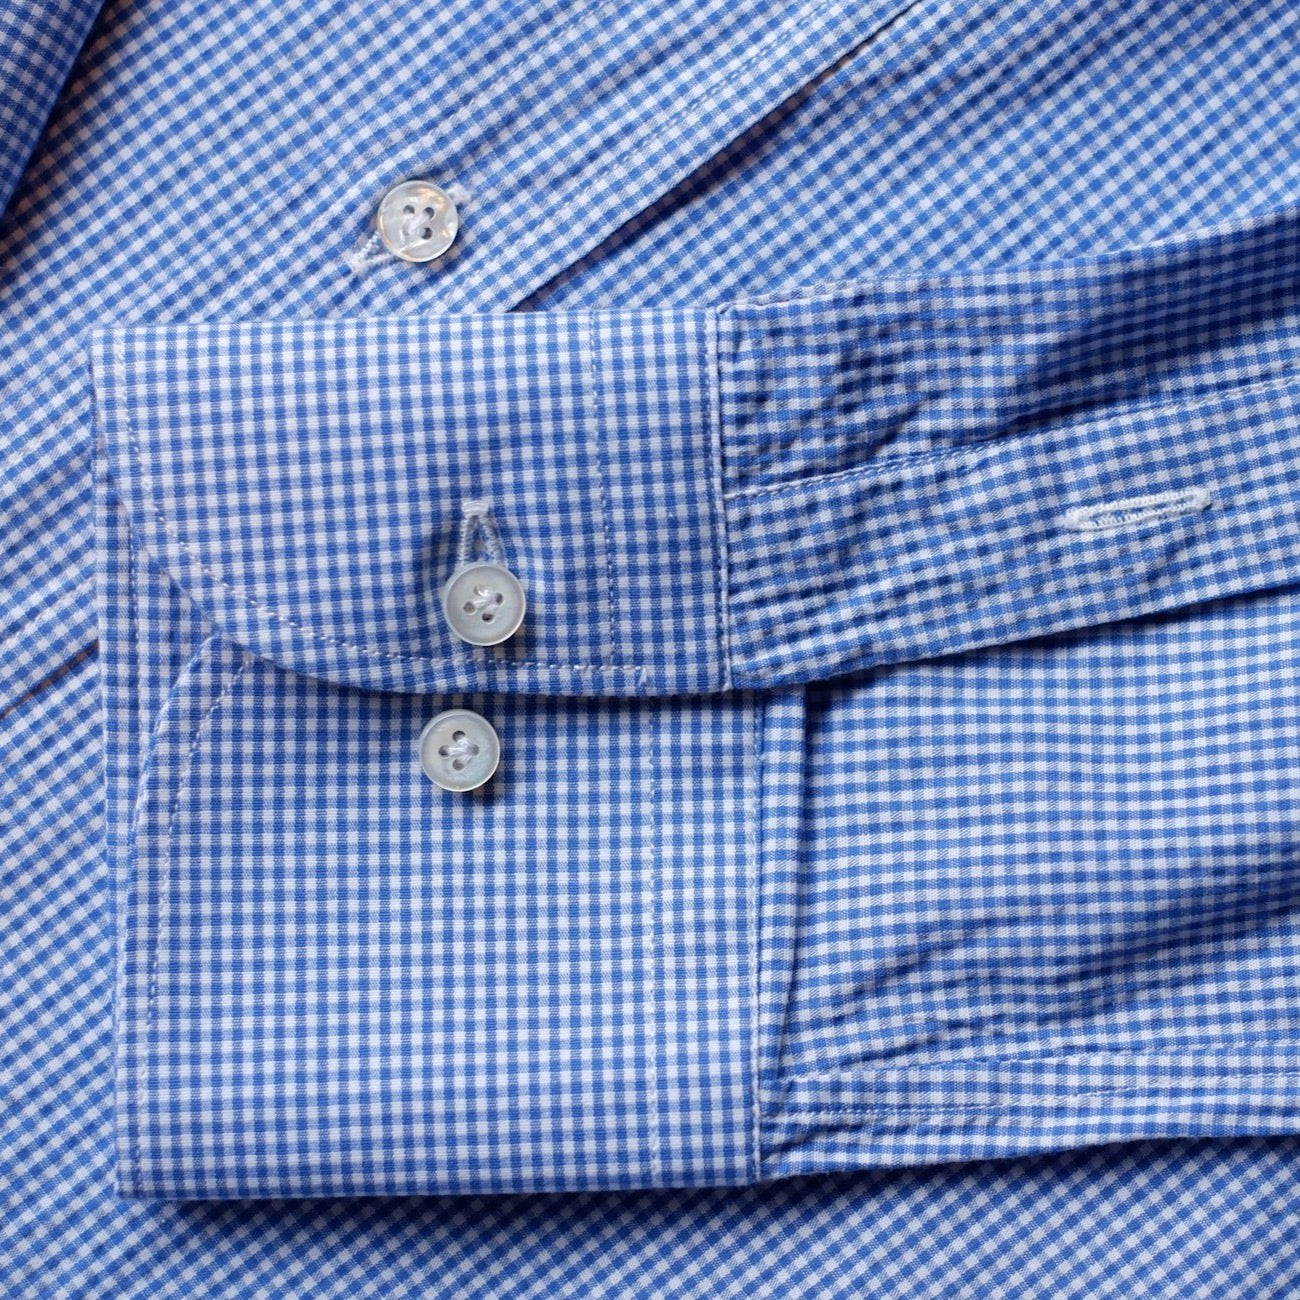 Vanny Napoli Blue Micro Gingham Spread Collar Shirt